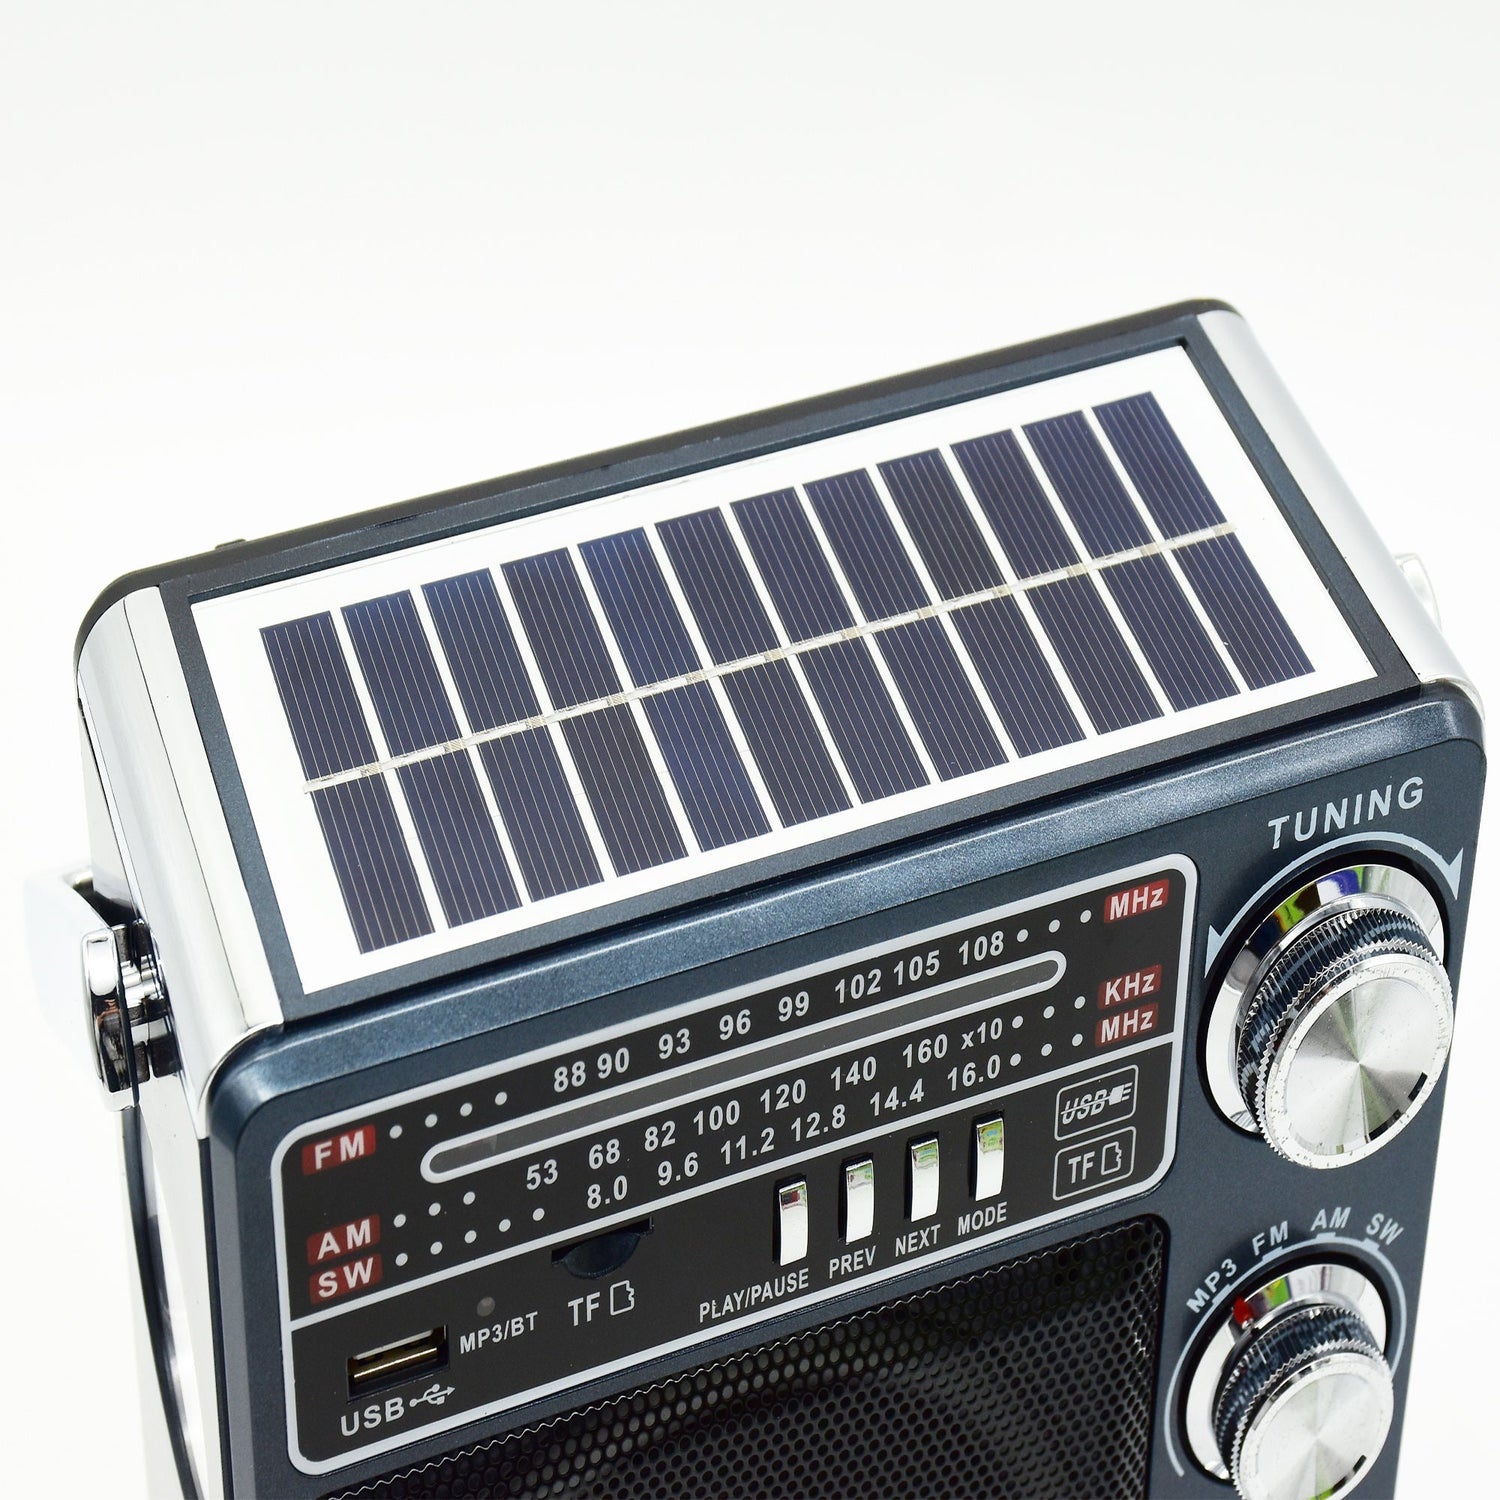 Radio portabil Solar cu panou Fotovoltaic integrat, acumulator intern si baterii, ROTOSONIC, AM, FM, SW